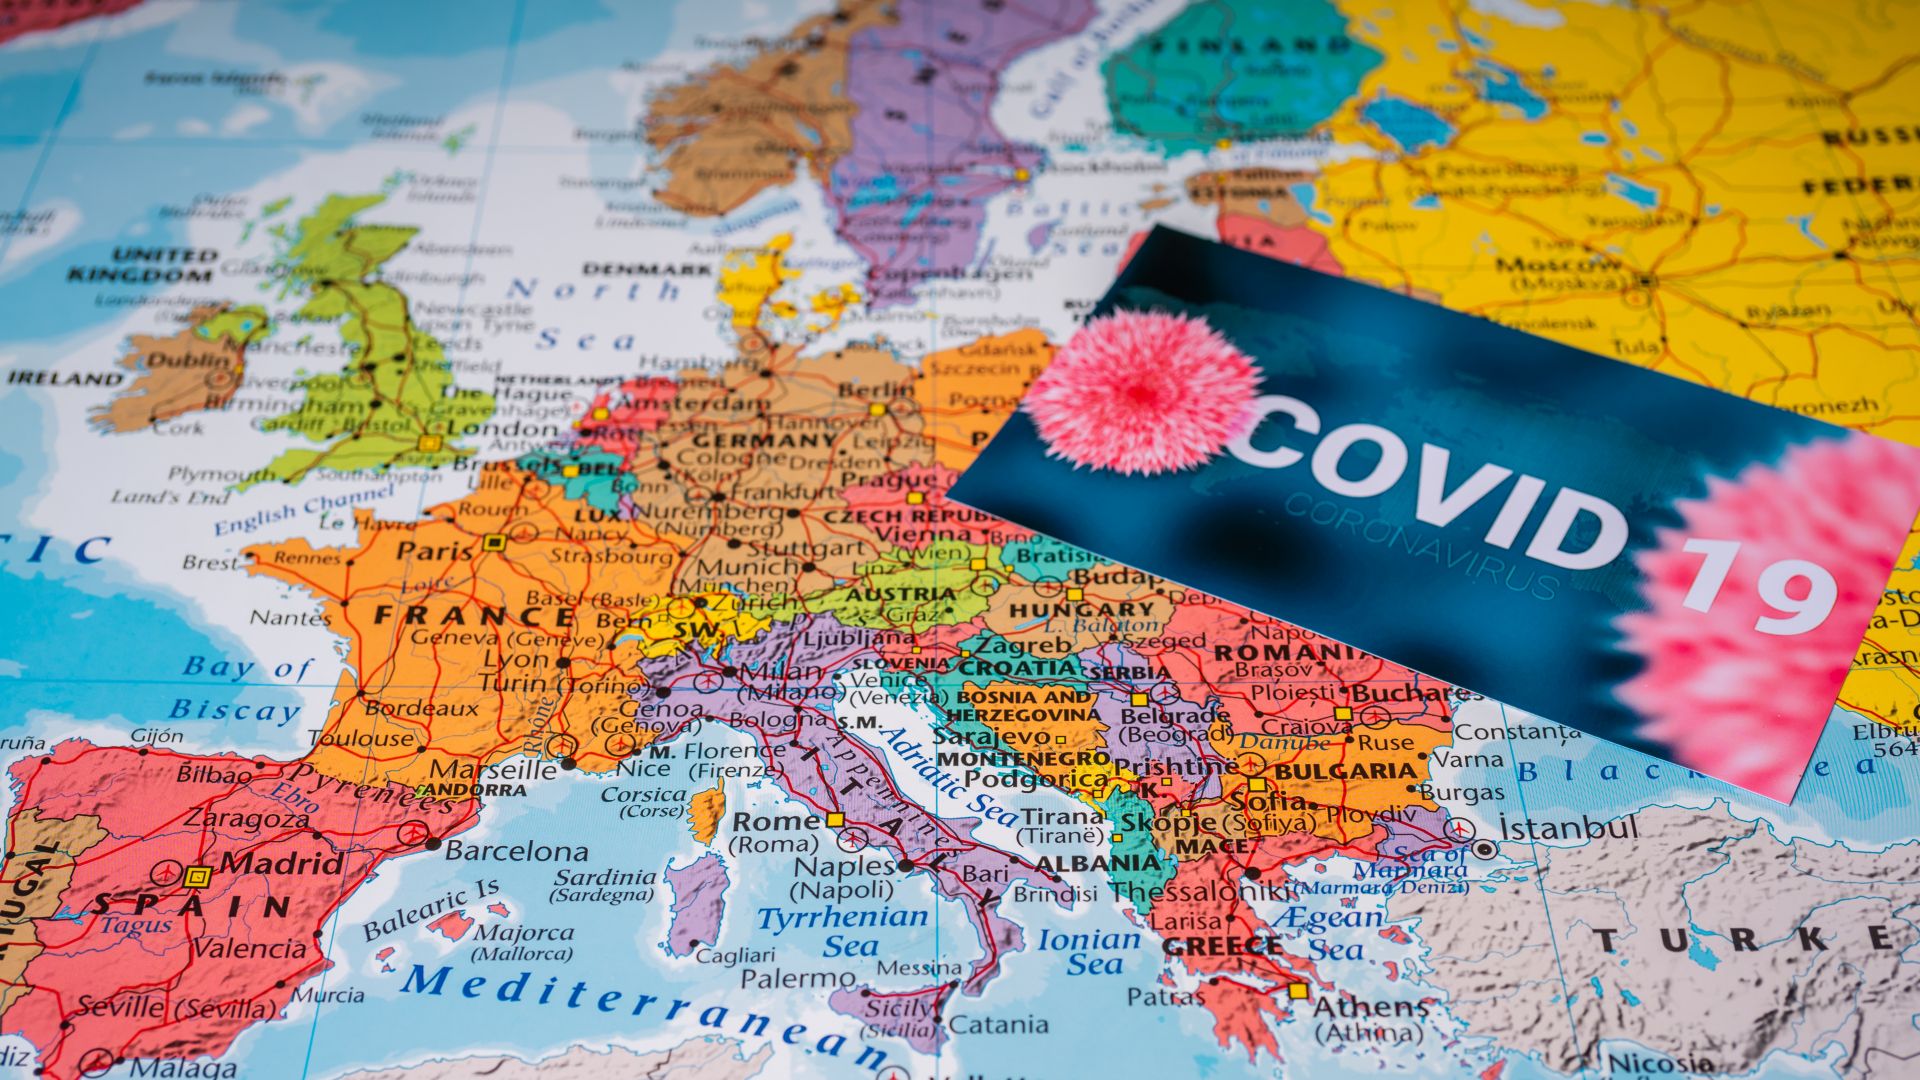 map europe covid